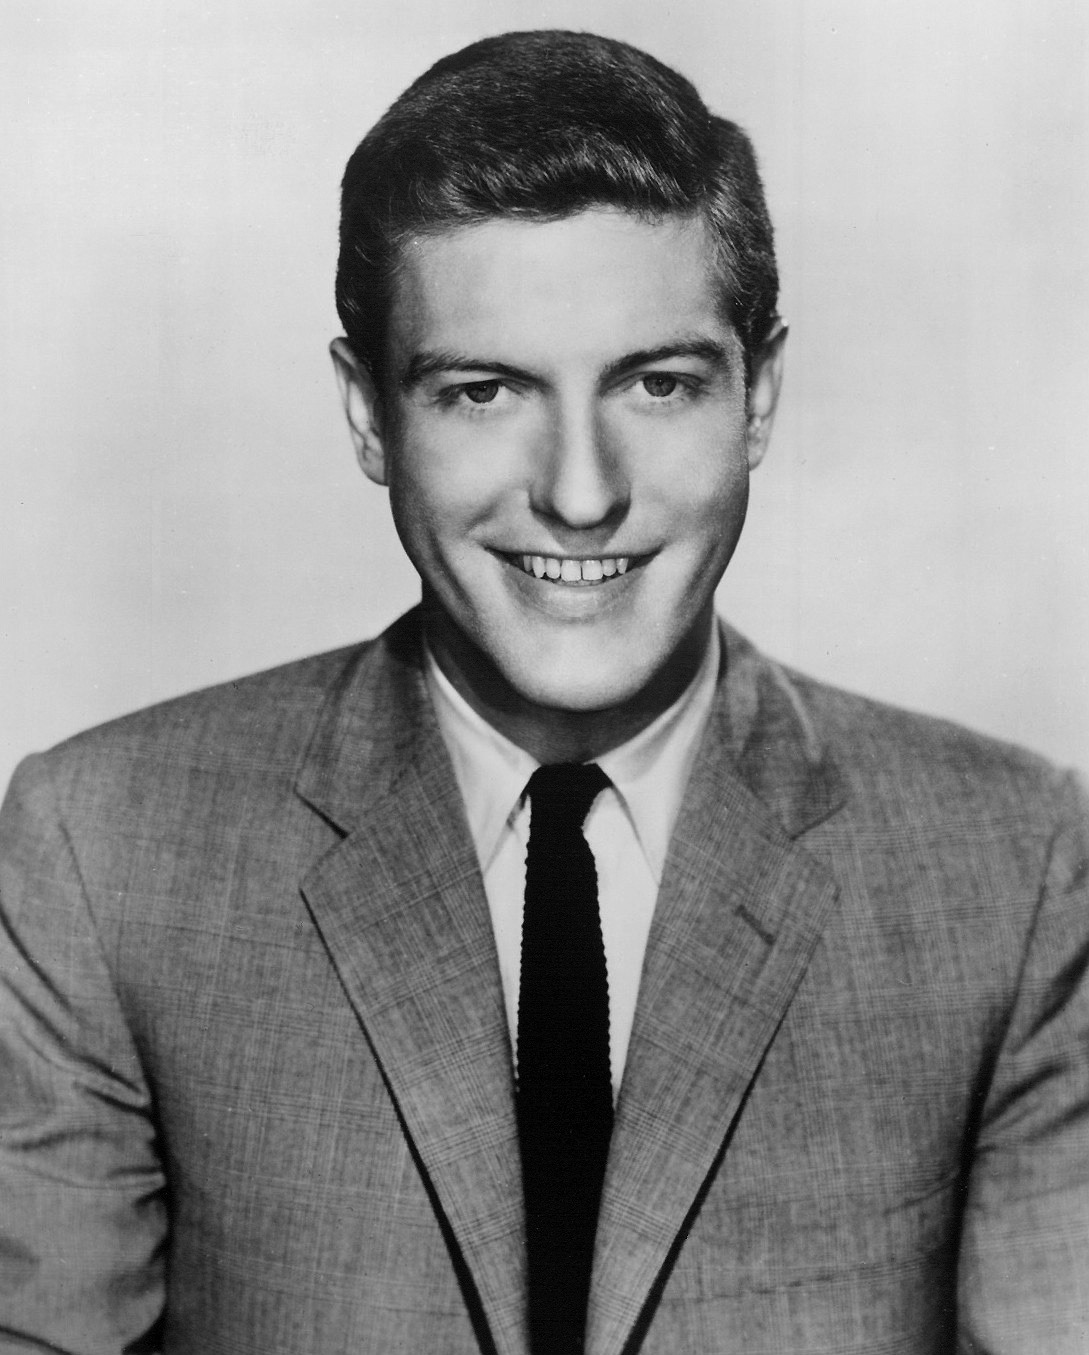 Van Dyke in a 1959 publicity photo